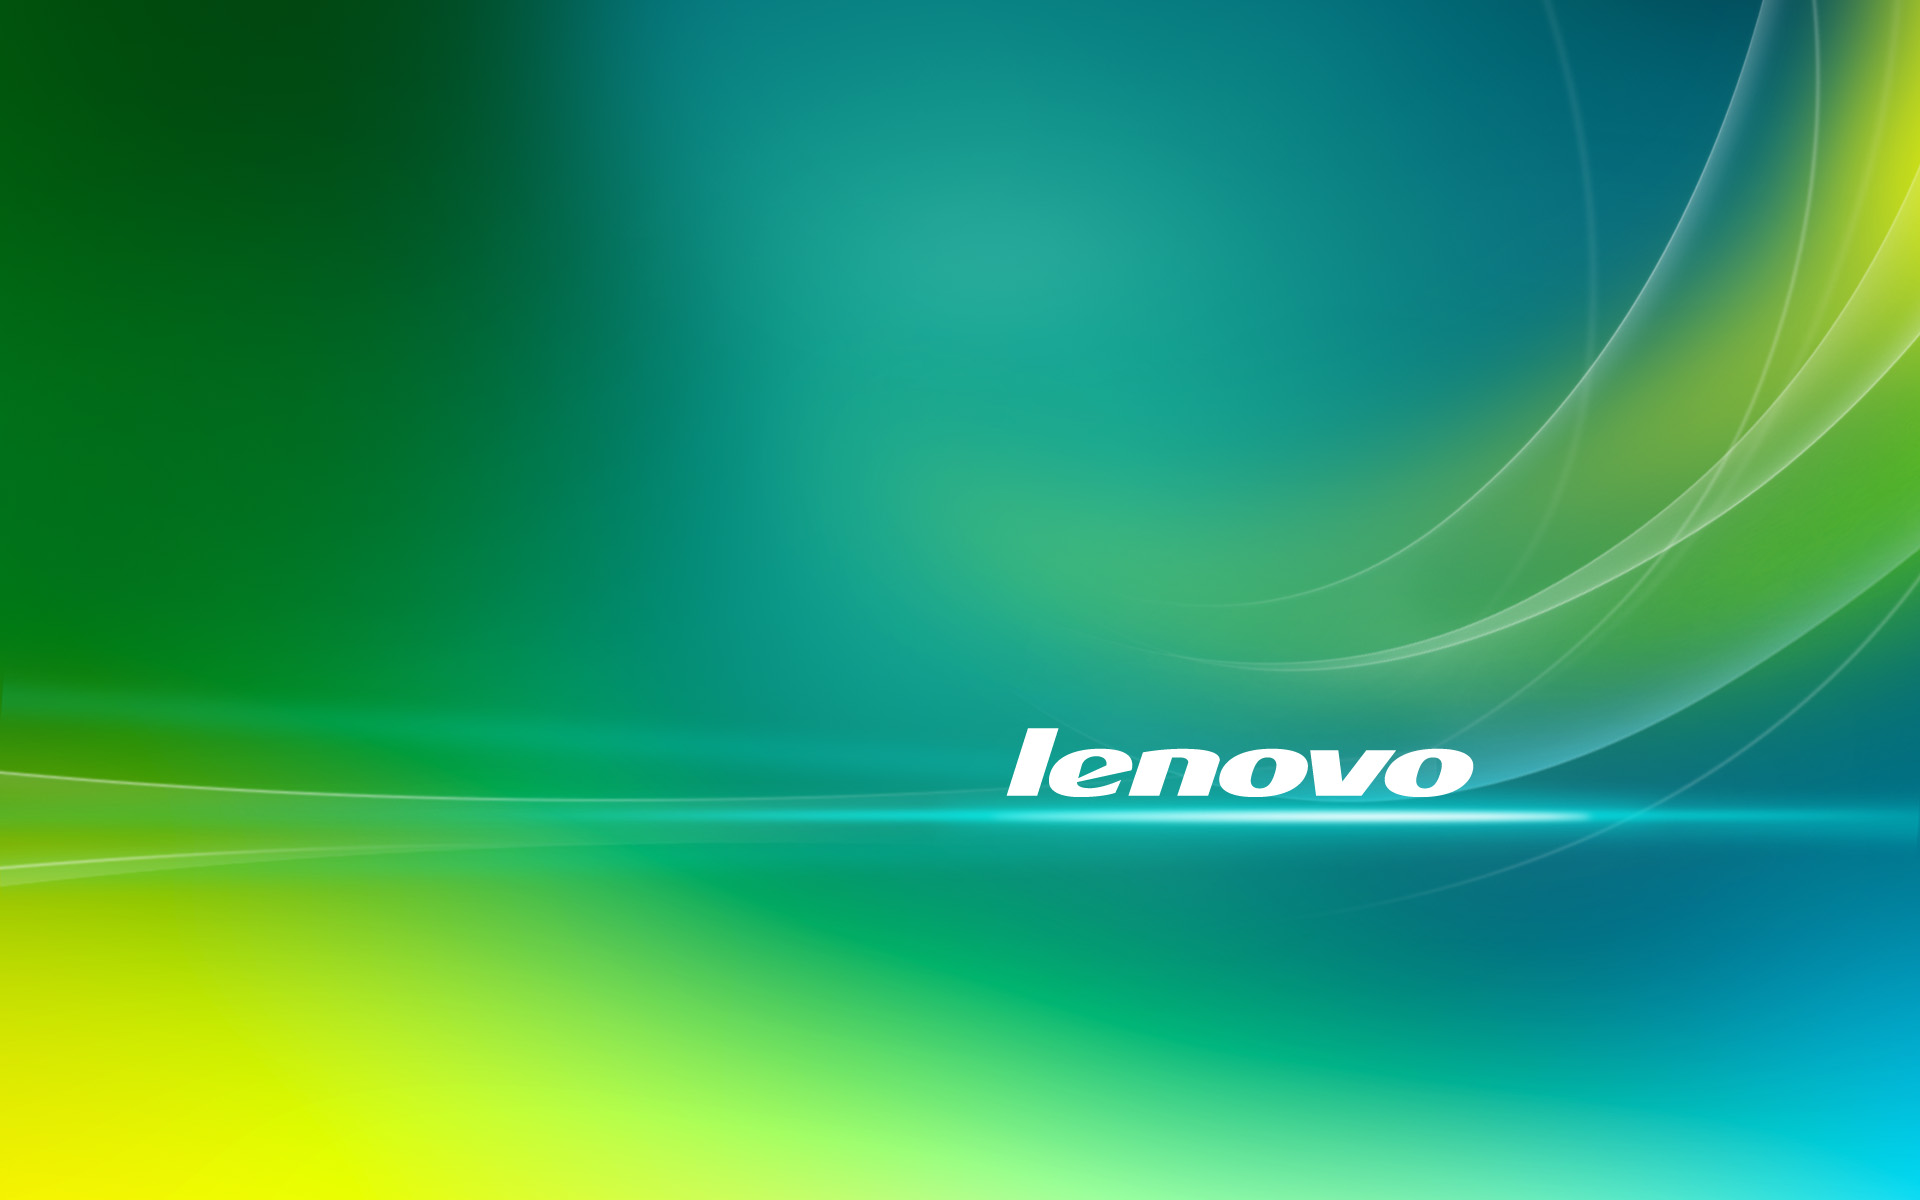 Top Lenovo Wallpaper Puter